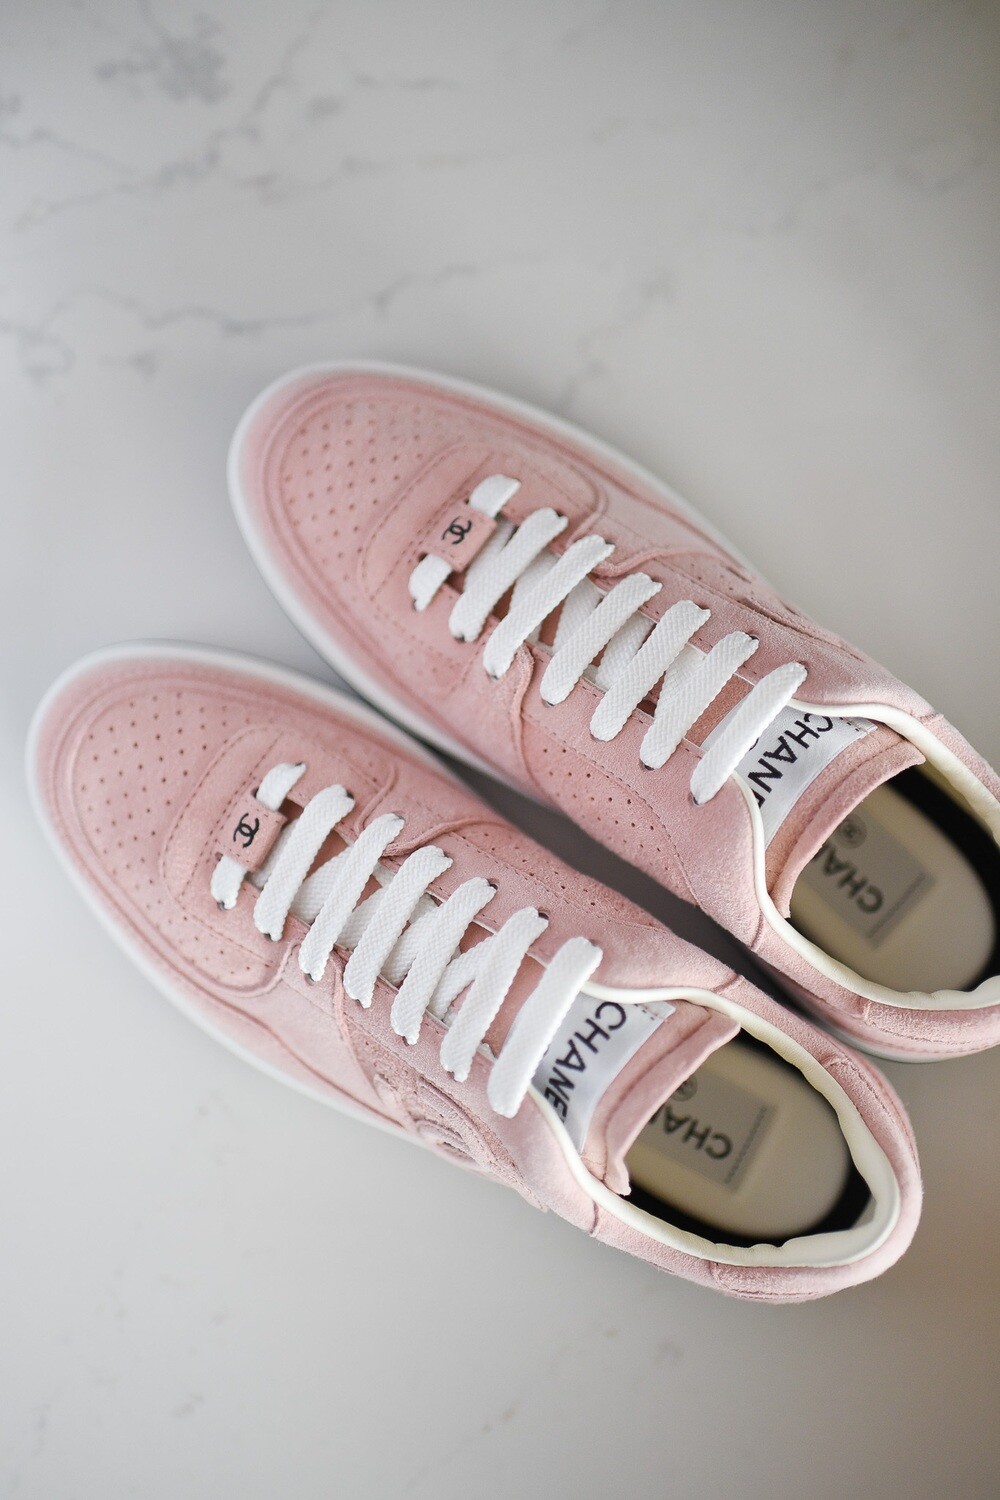 Chanel Sneakers, Pink Suede, New in Box GA001 - Julia Rose Boston | Shop